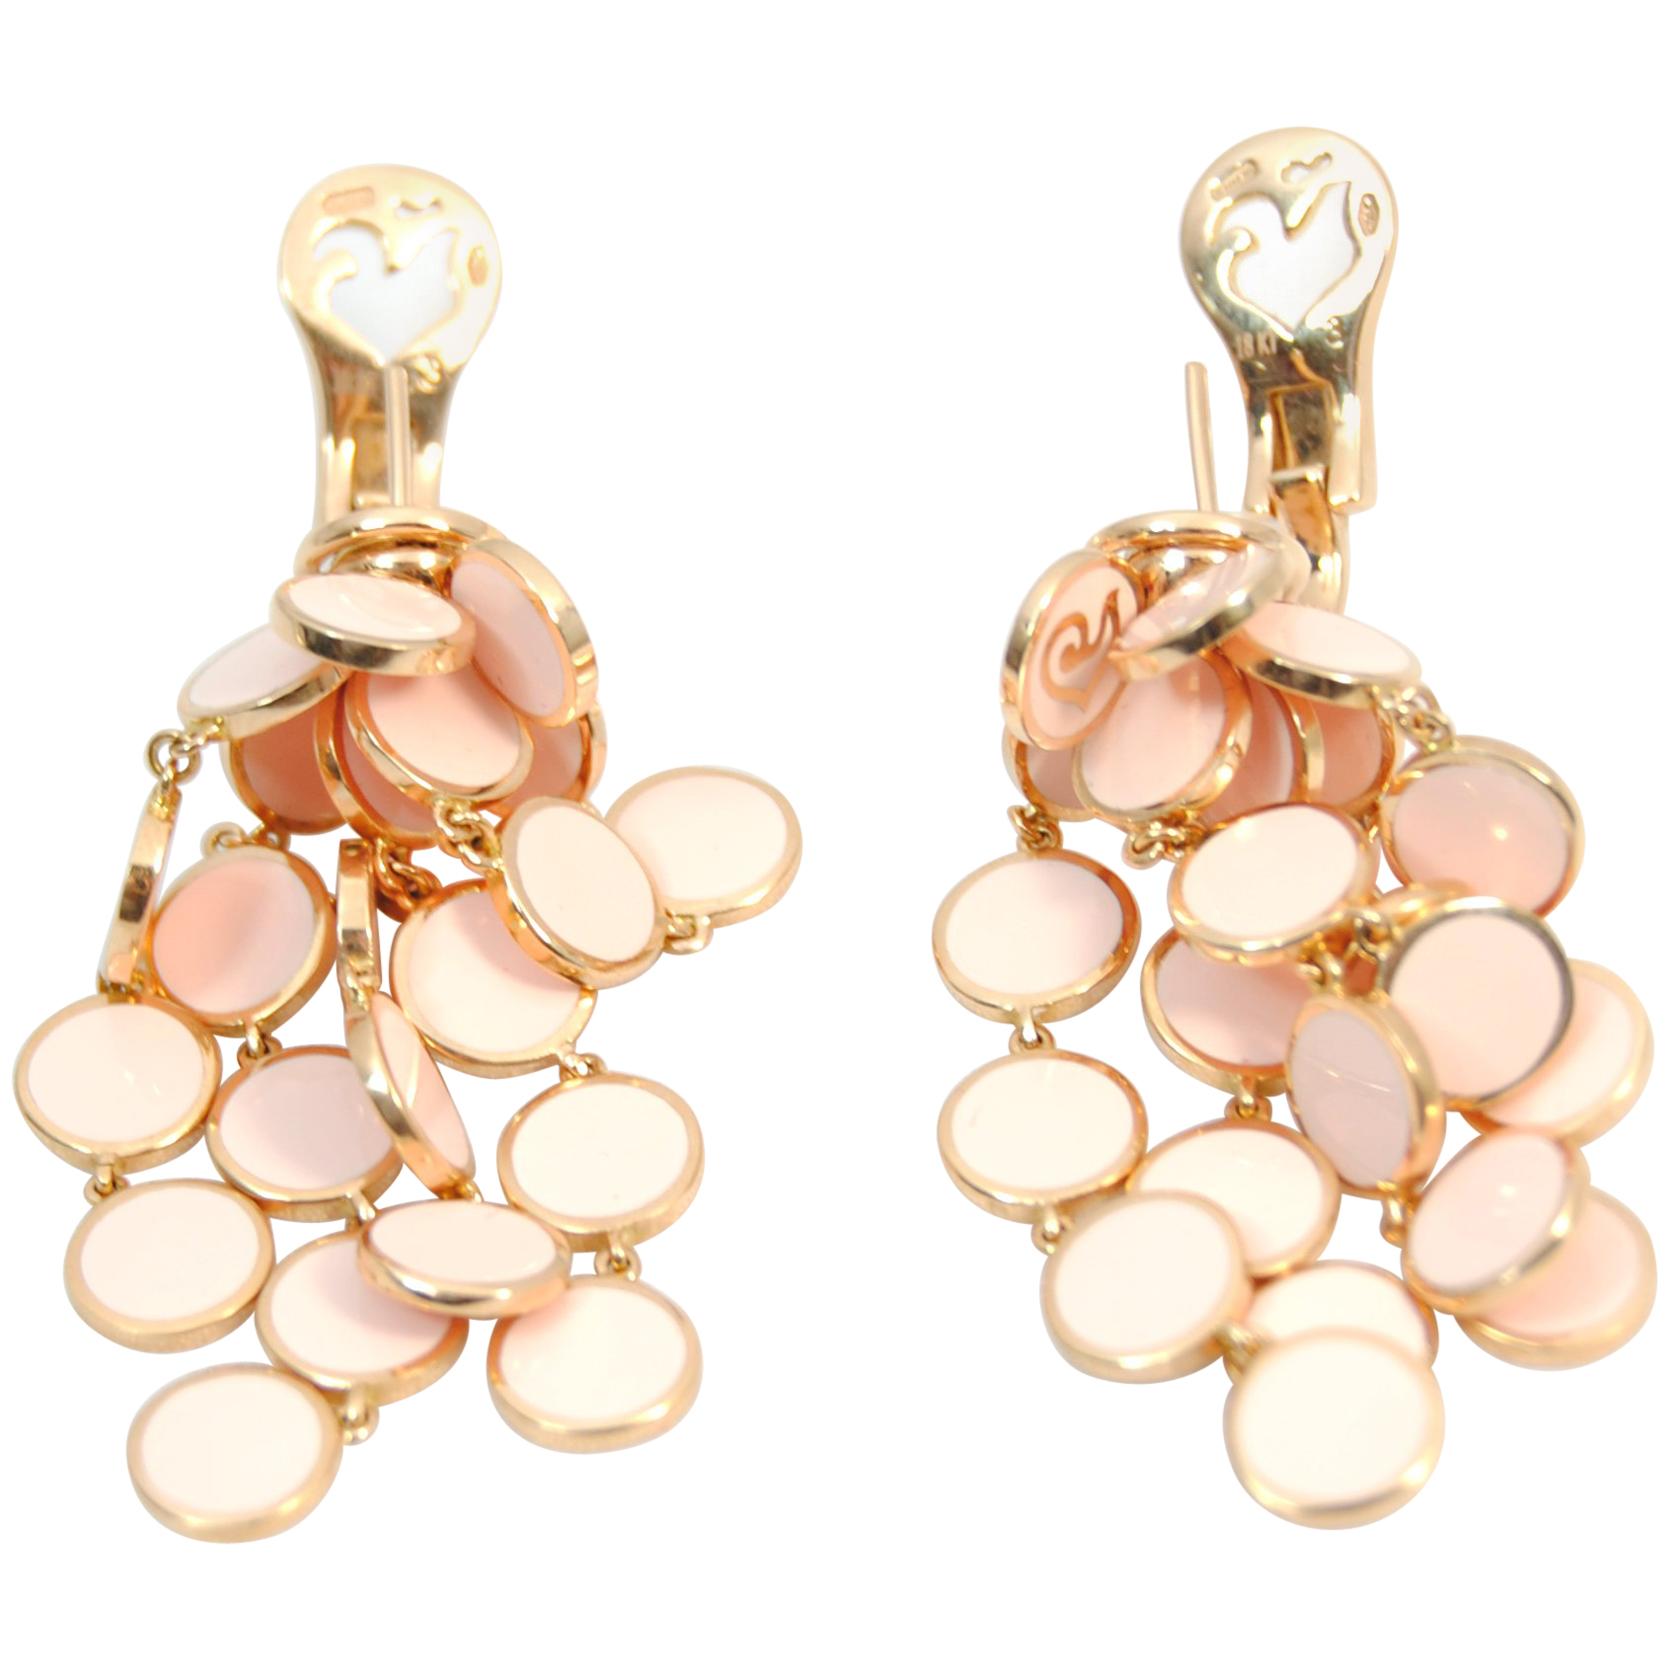 Chantecler "Pailletes" Pink Enamel petals in 18kt Gold Earrings